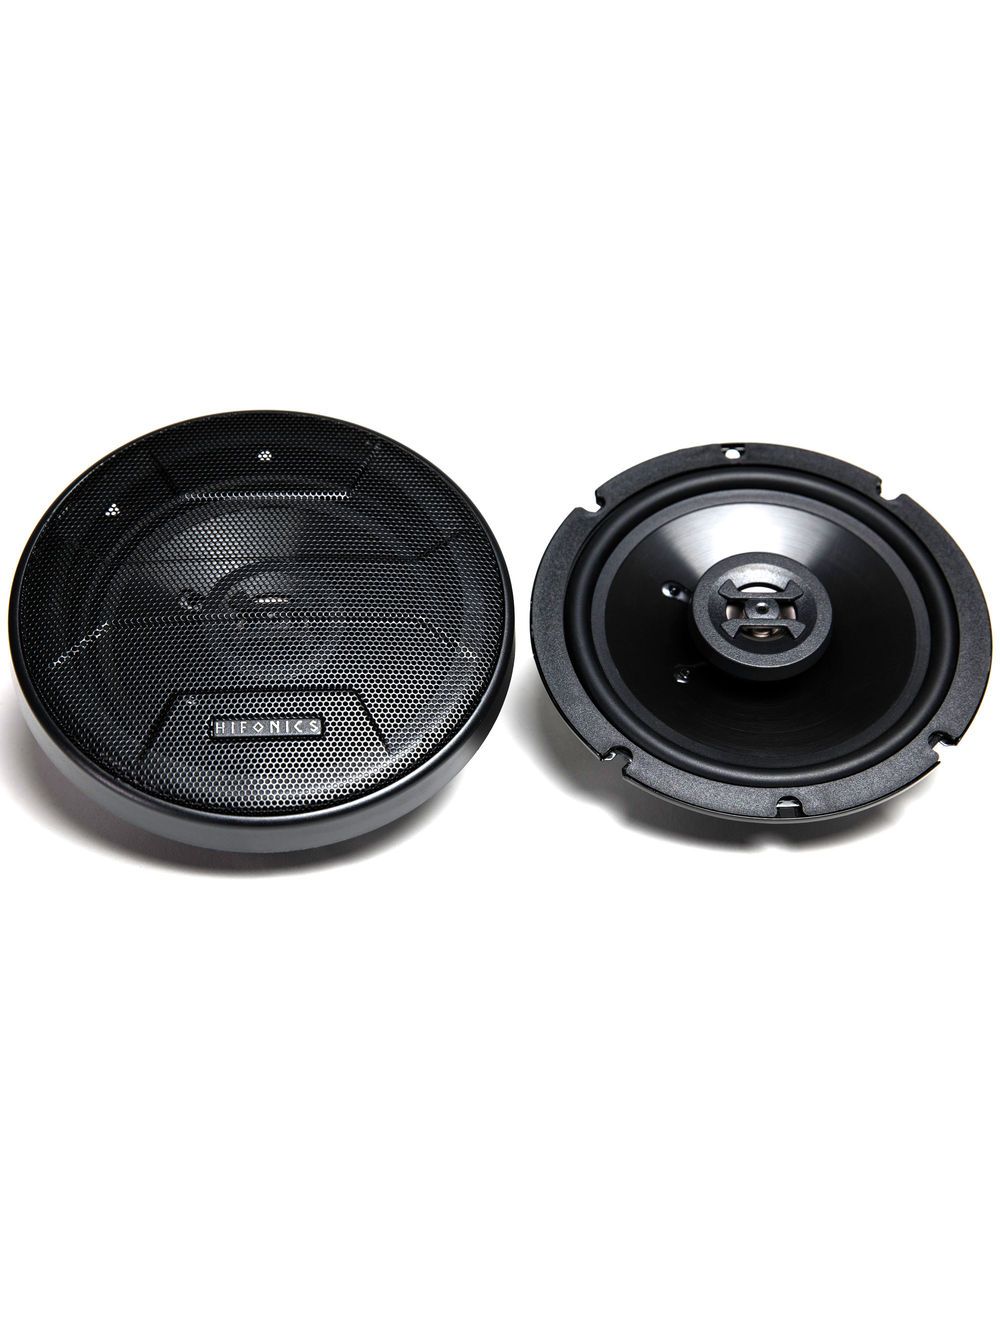 Hifonics ZS65CXS 300W MAX 6.5" Zeus Shallow Mount Coaxial Car Speakers